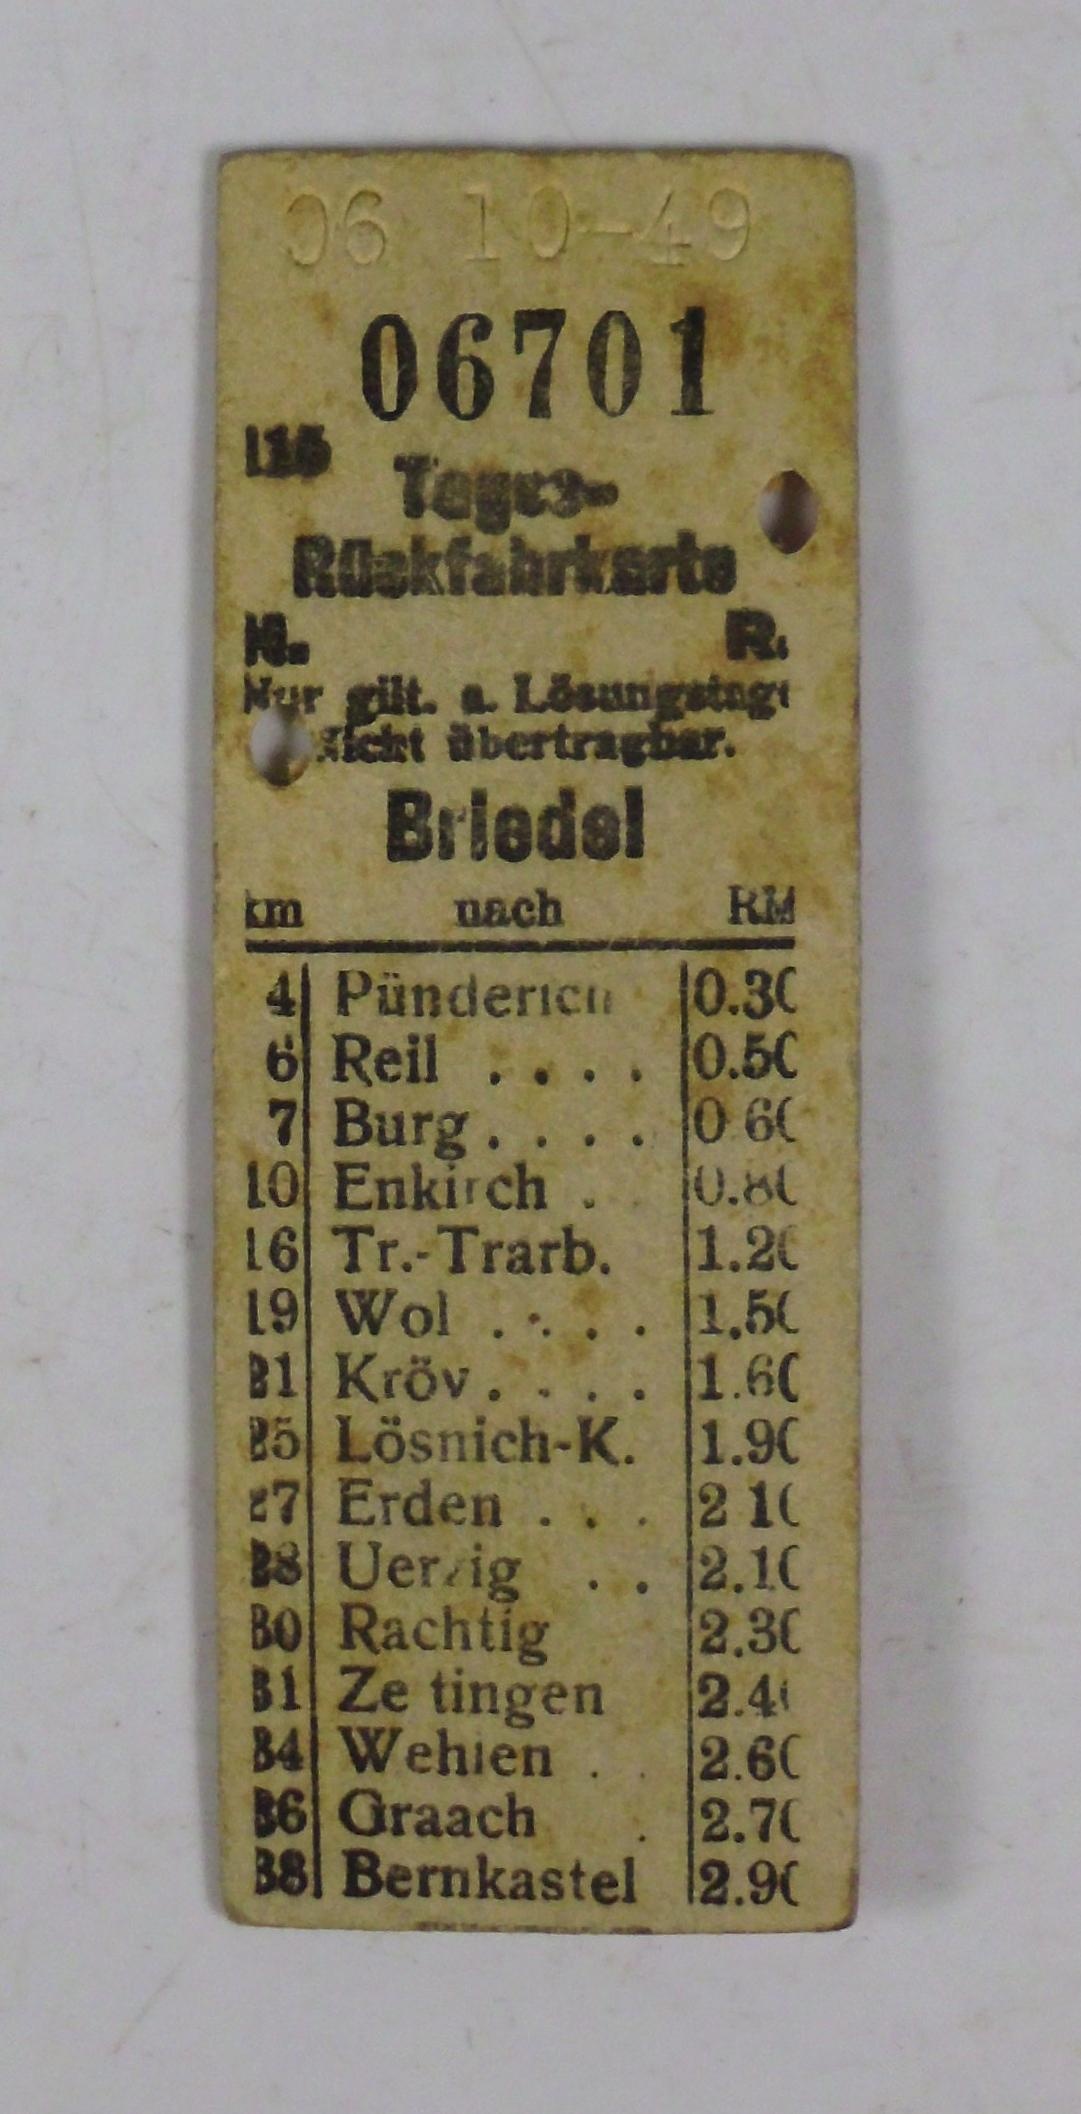 Fahrkarte (DampfLand Leute - Museum Eslohe CC BY-NC-SA)